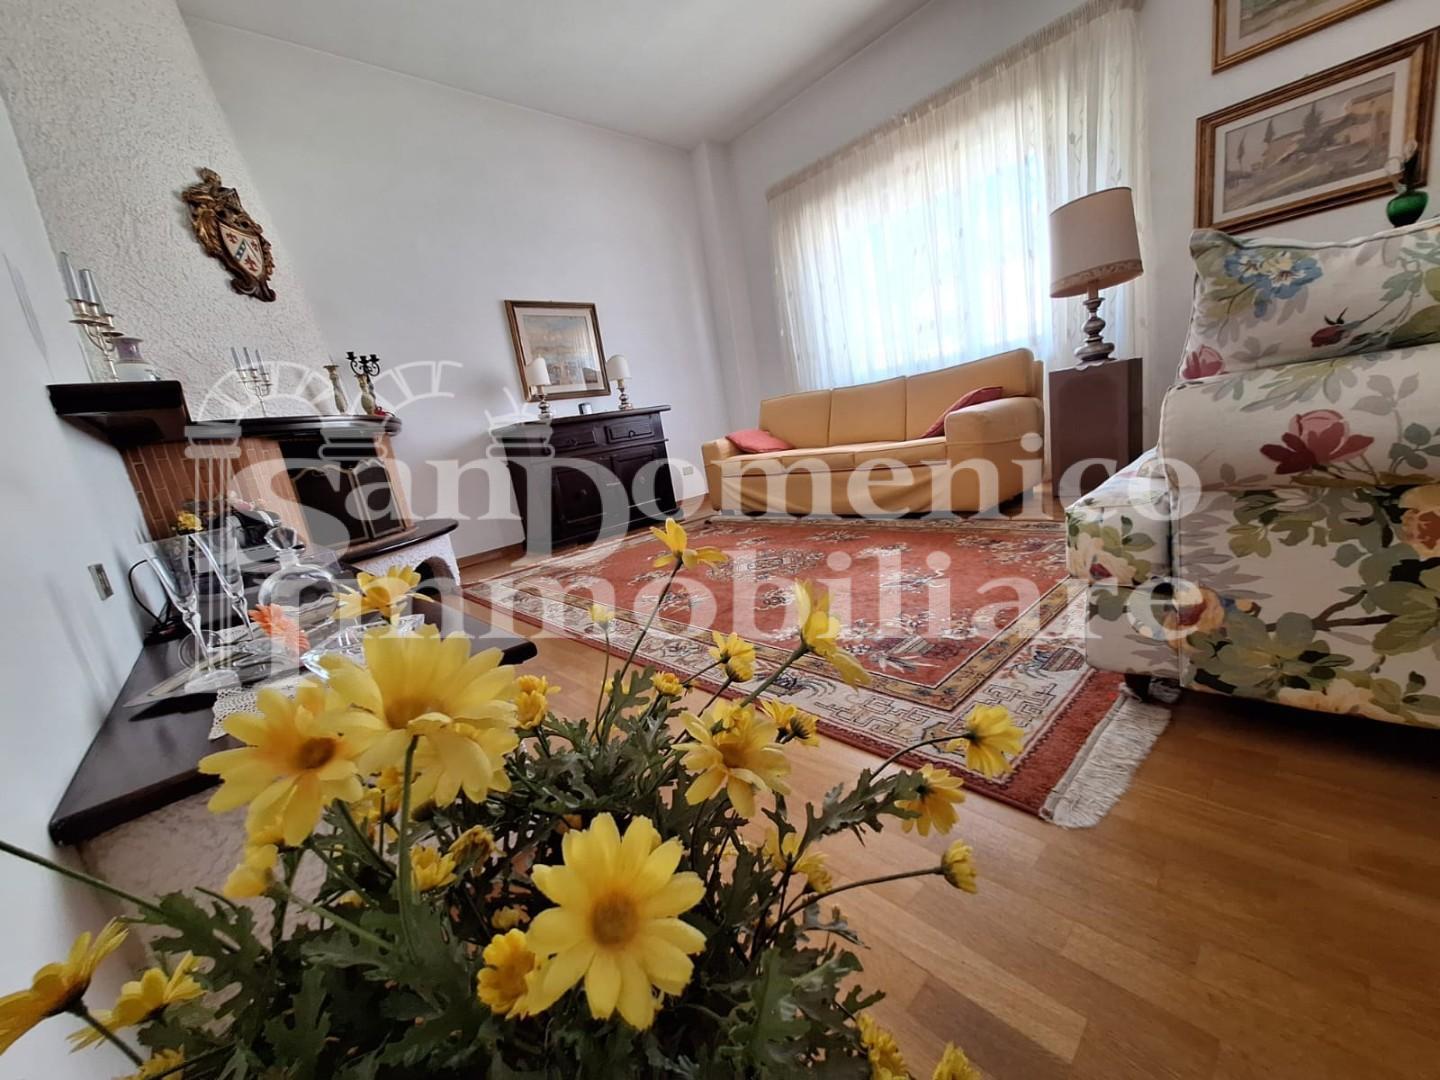 Apartment for sale in Cascina (PI)